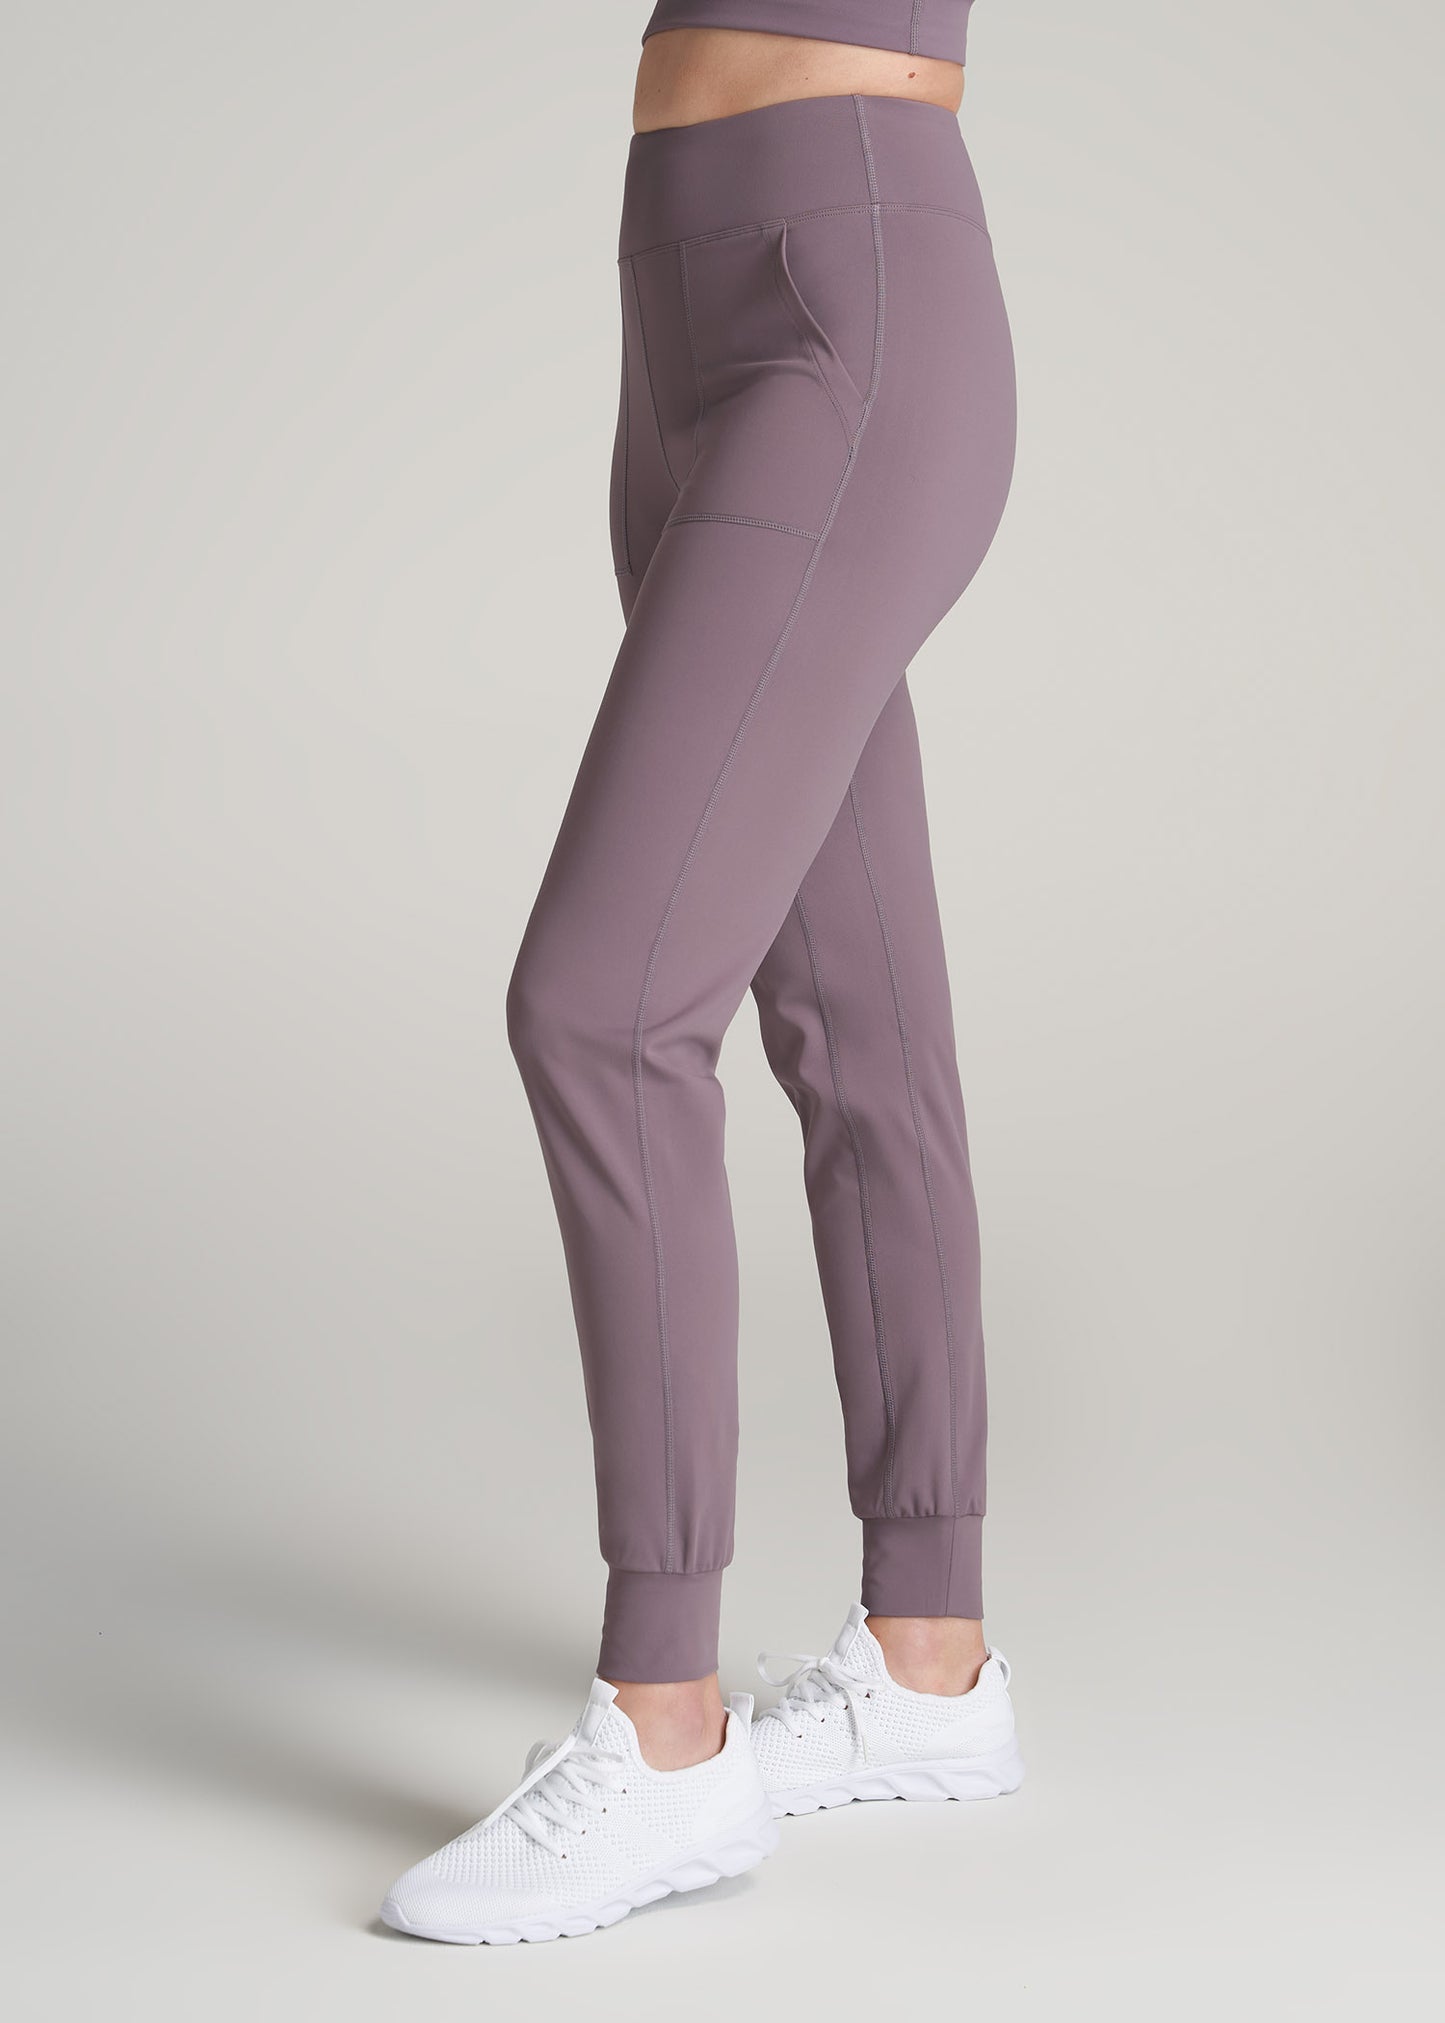 Women's Tall Sweatpants & Athletic Pants